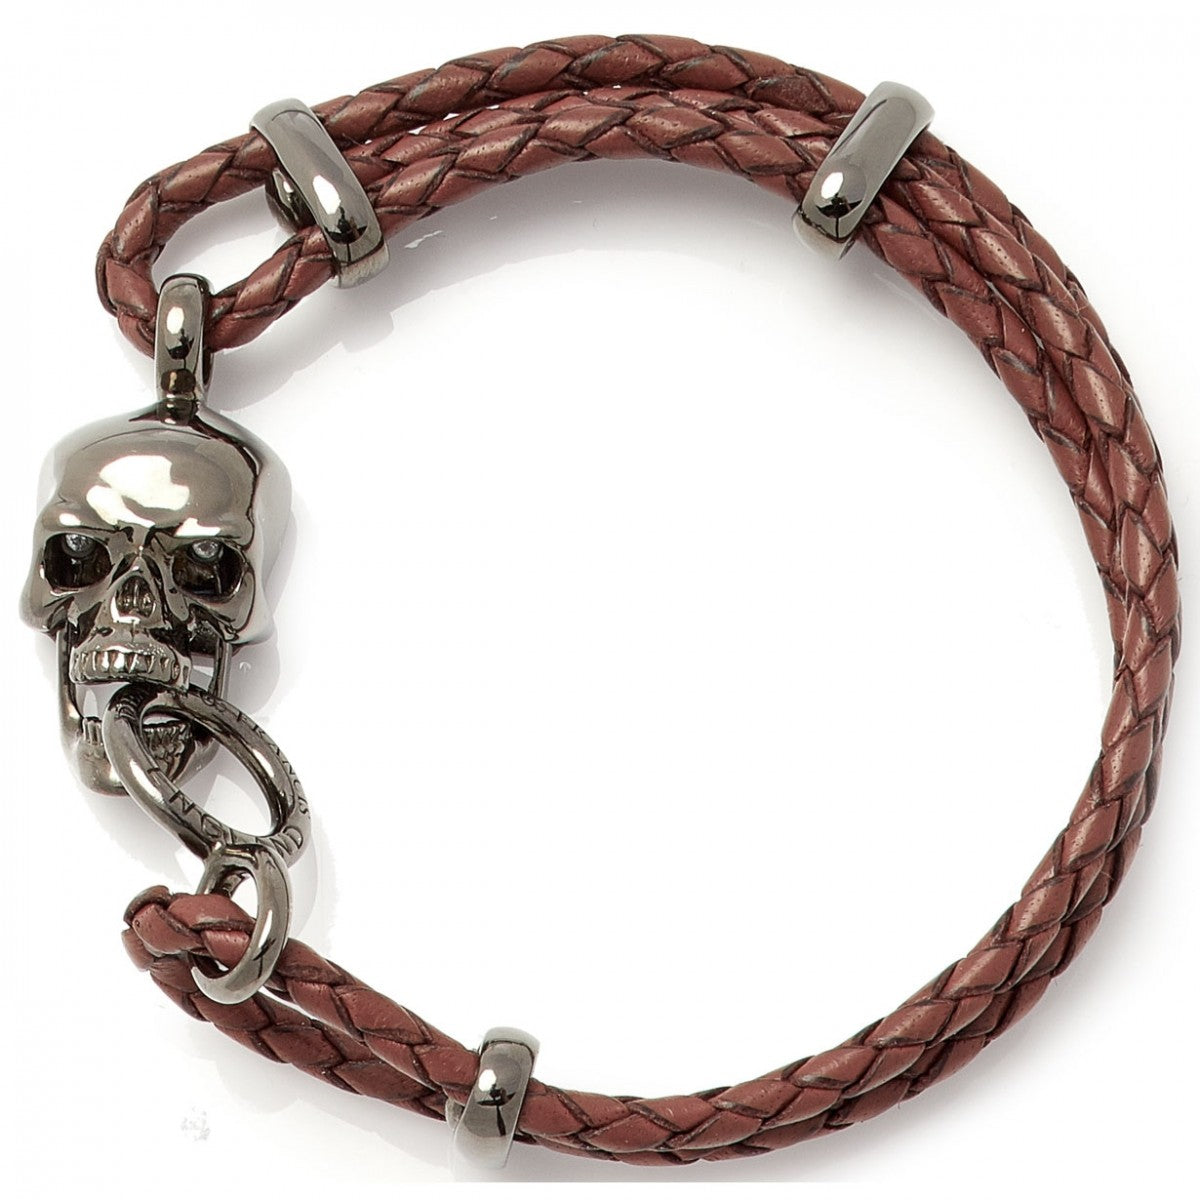 Deakin & Francis Leather Skull Bracelet, Brown, Length 8 inches